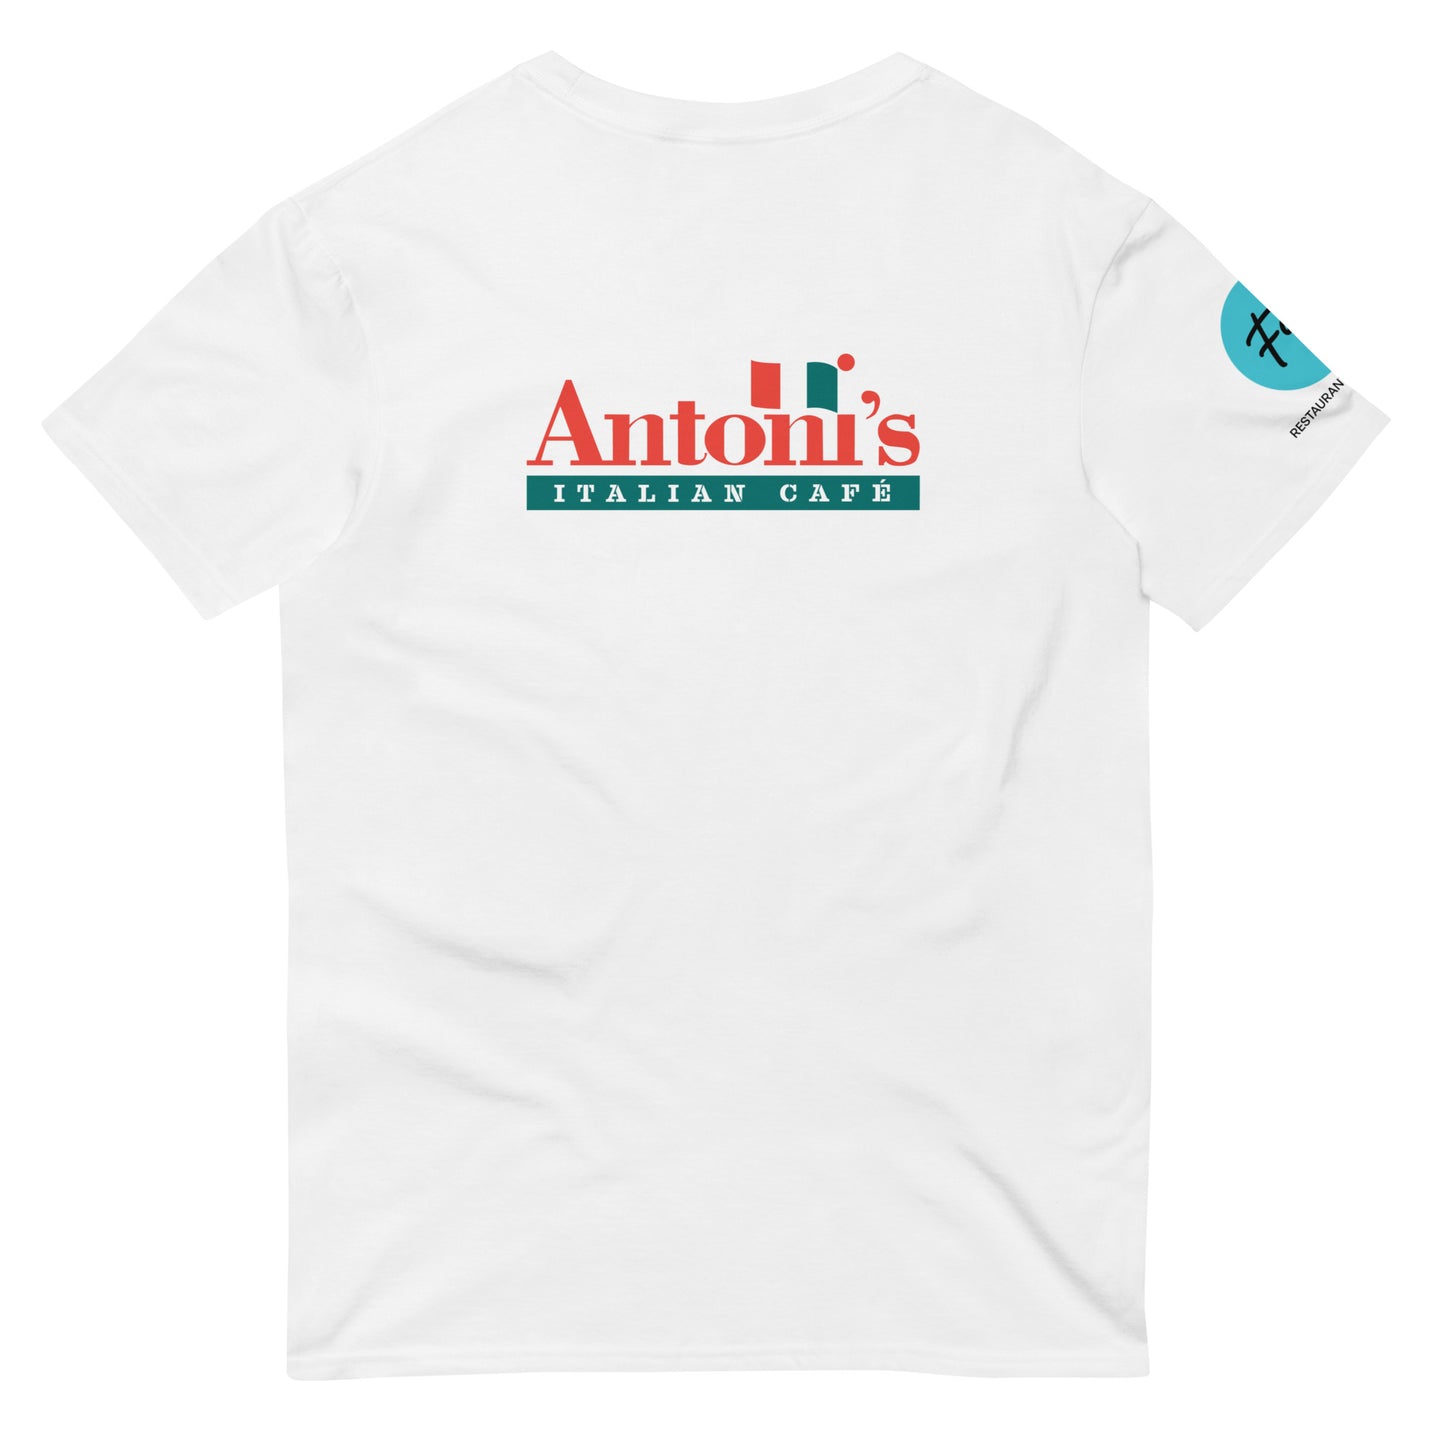 Antoni's Italian Cafe Short-Sleeve T-Shirt